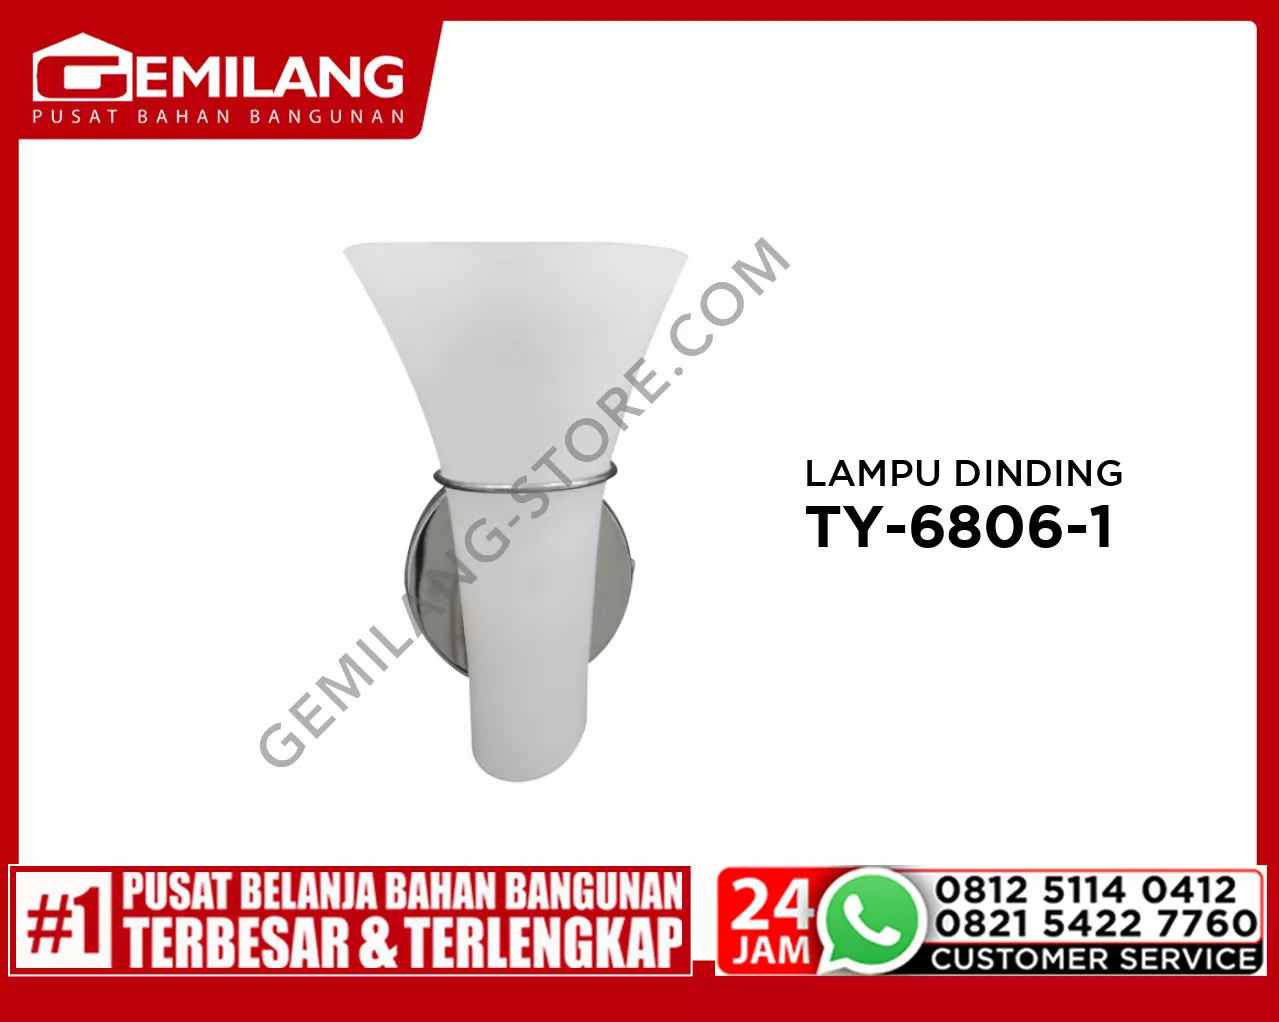 LAMPU DINDING TY-6806-1